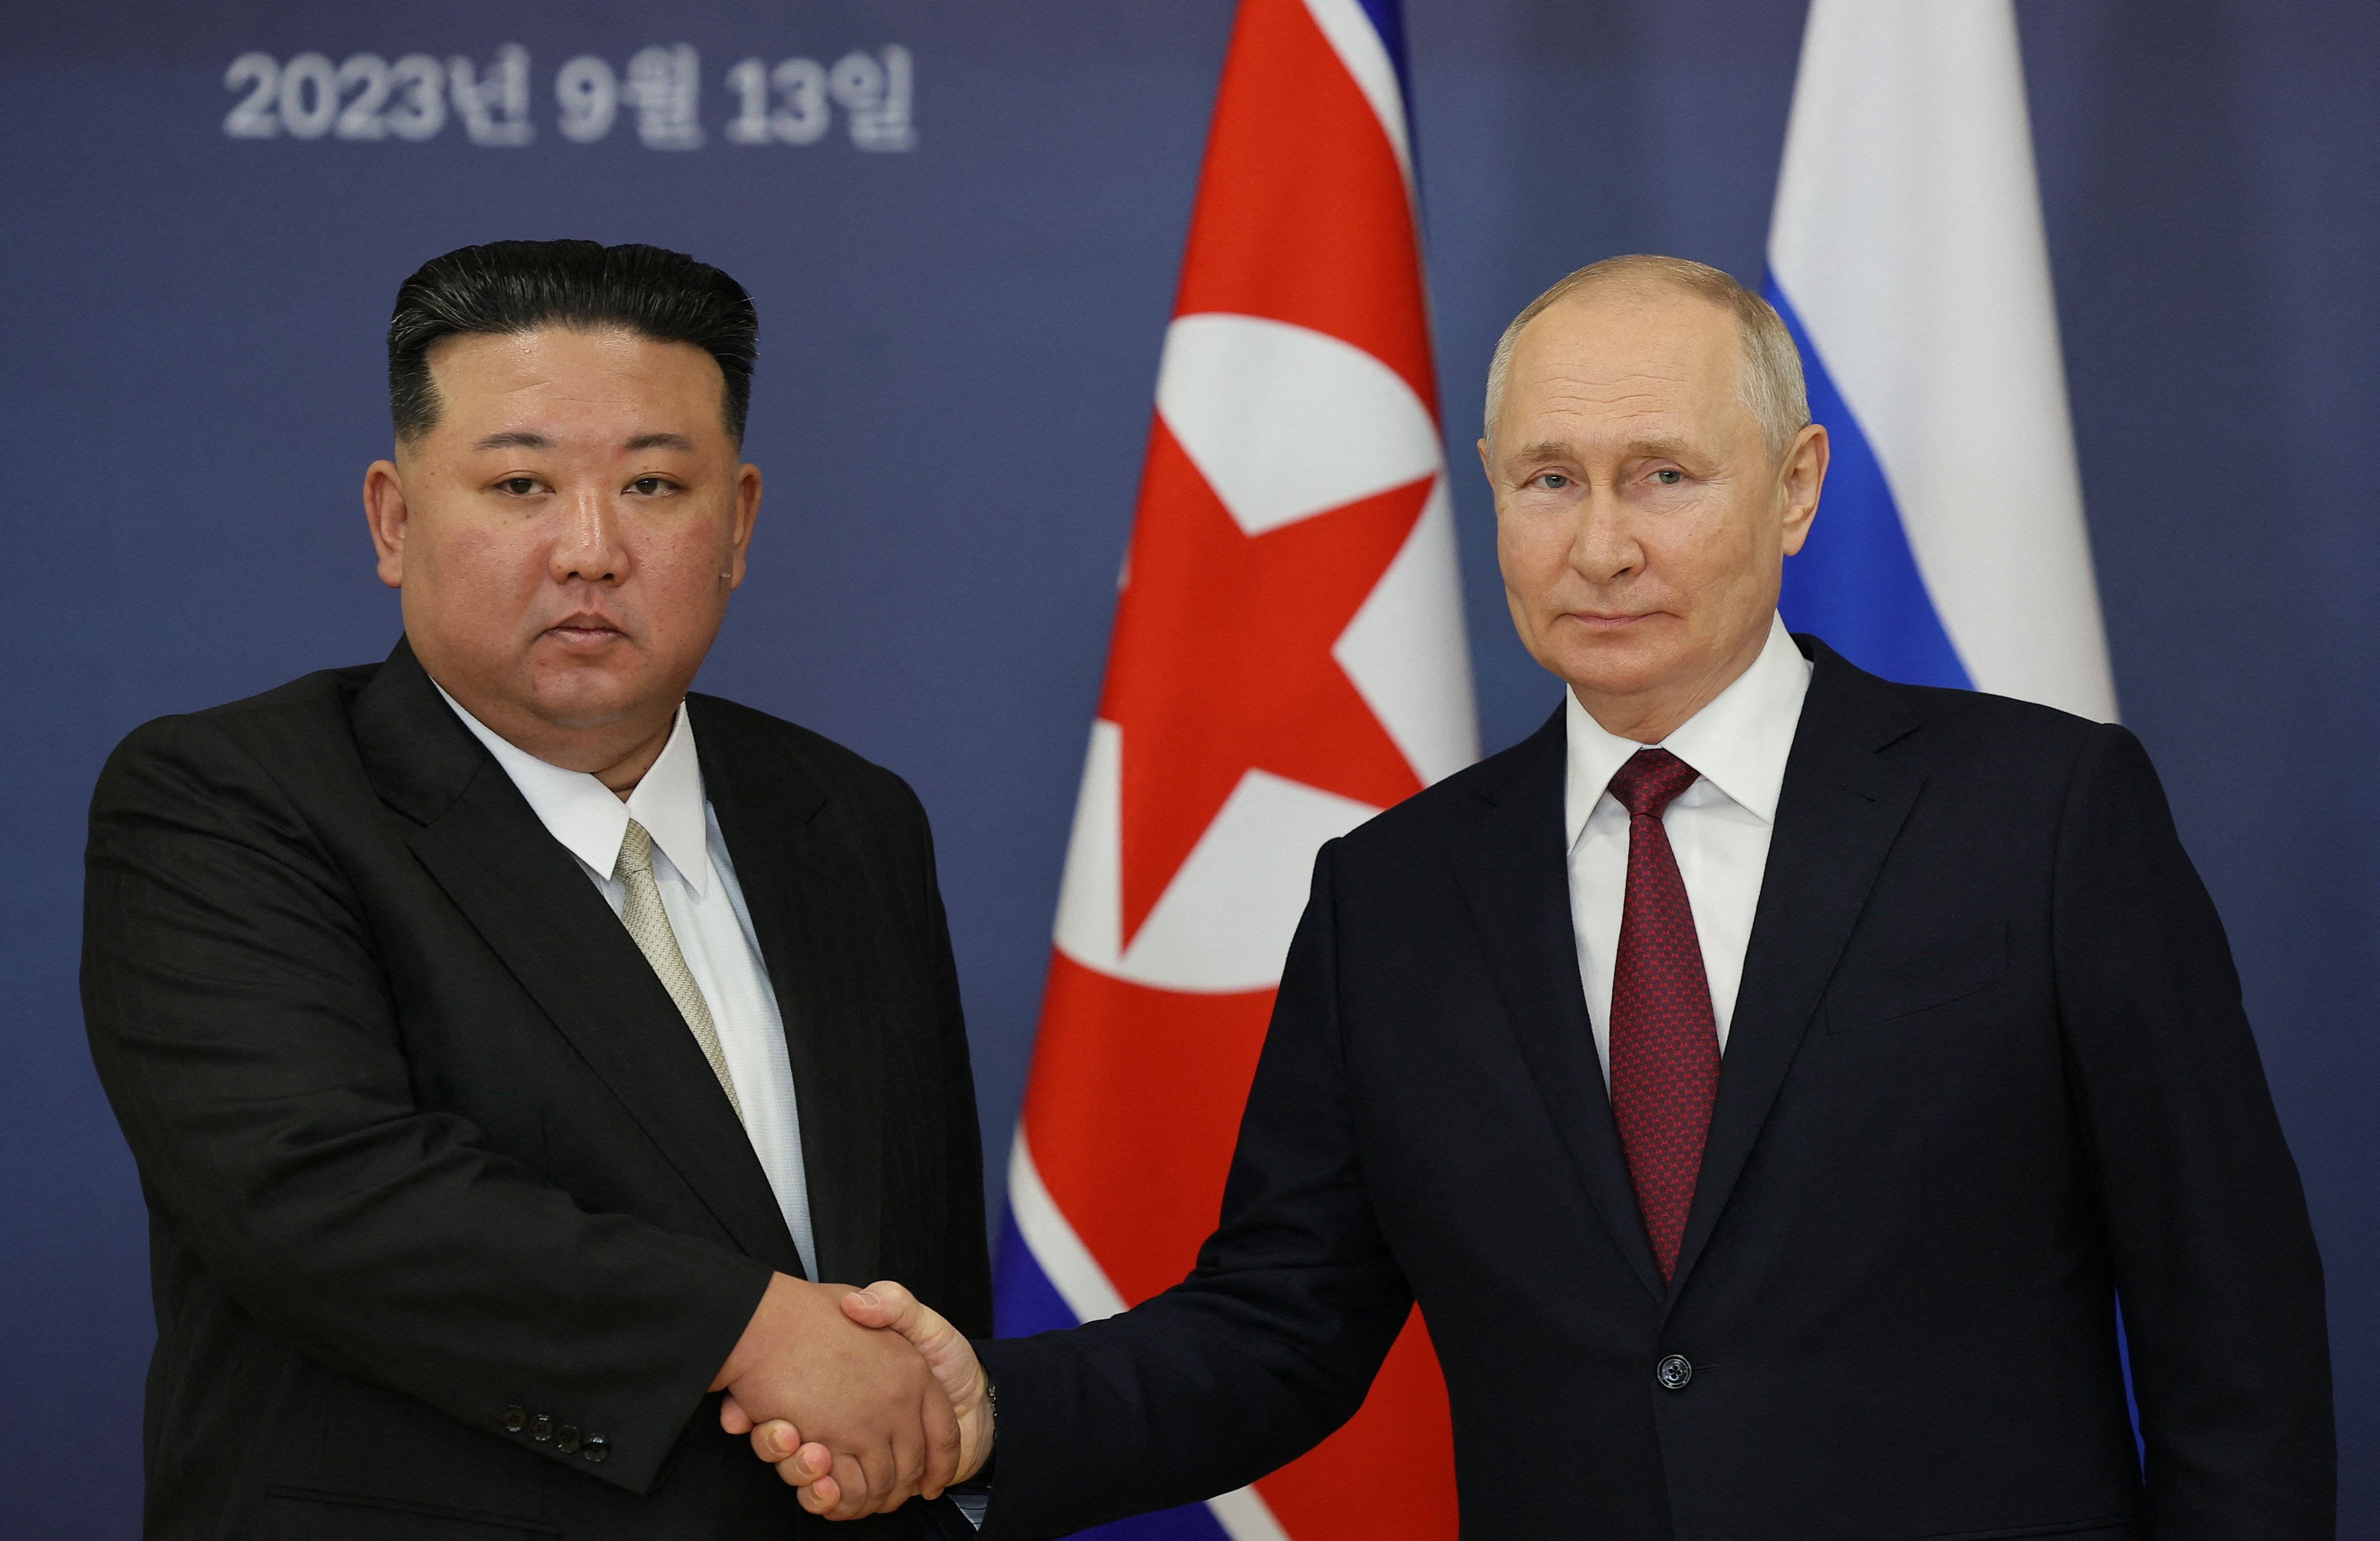 Kim Jong Un and Vladimir Putin shake hands as they met in Russia on Sept. 13, 2023. (Vladimir Smirnov—Sputnik/Pool/AFP/Getty Images)